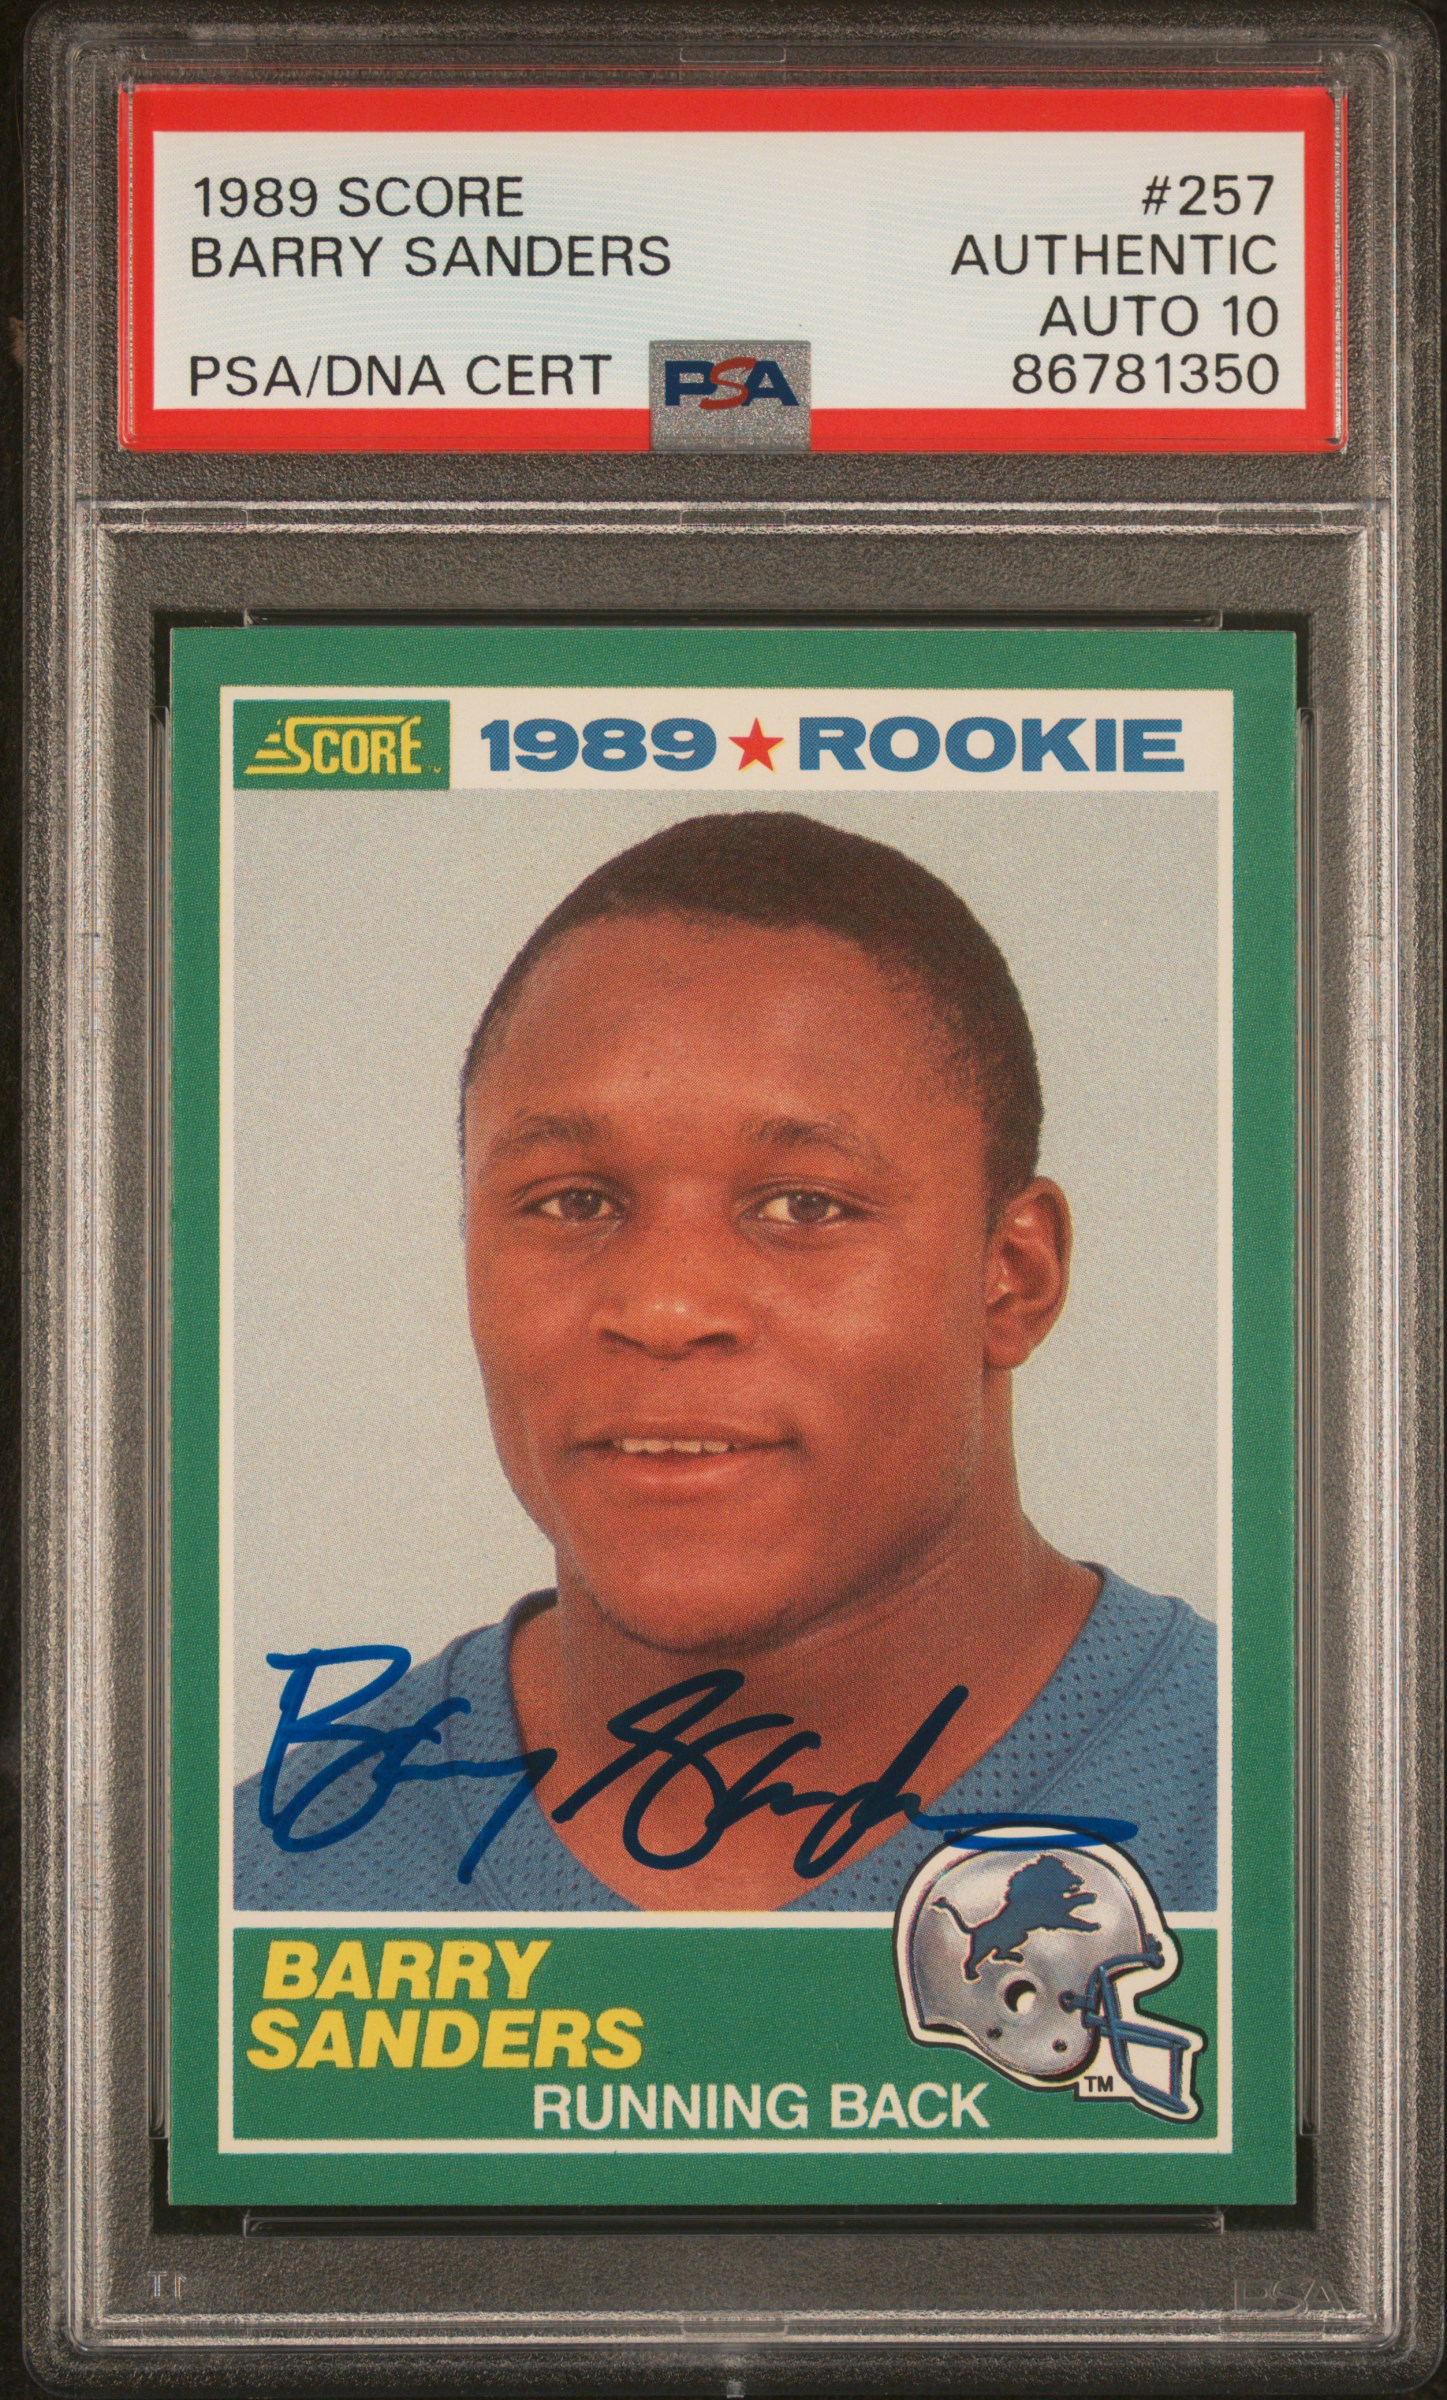 Barry Sanders 1989 Score Signed Football Rookie Card #257 Auto PSA 10 86781350